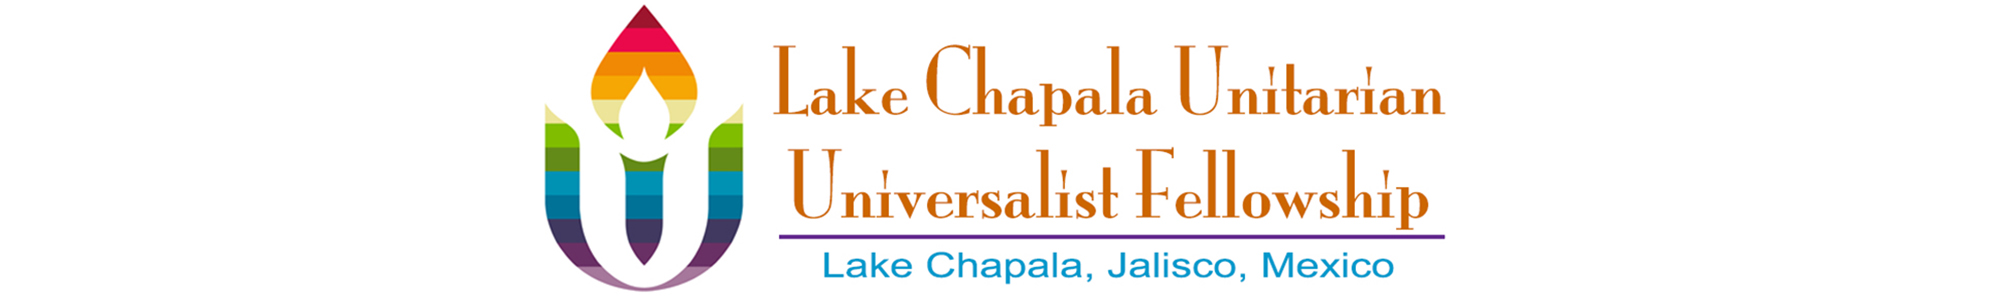 Lake Chapala Unitarian Universalist Fellowship